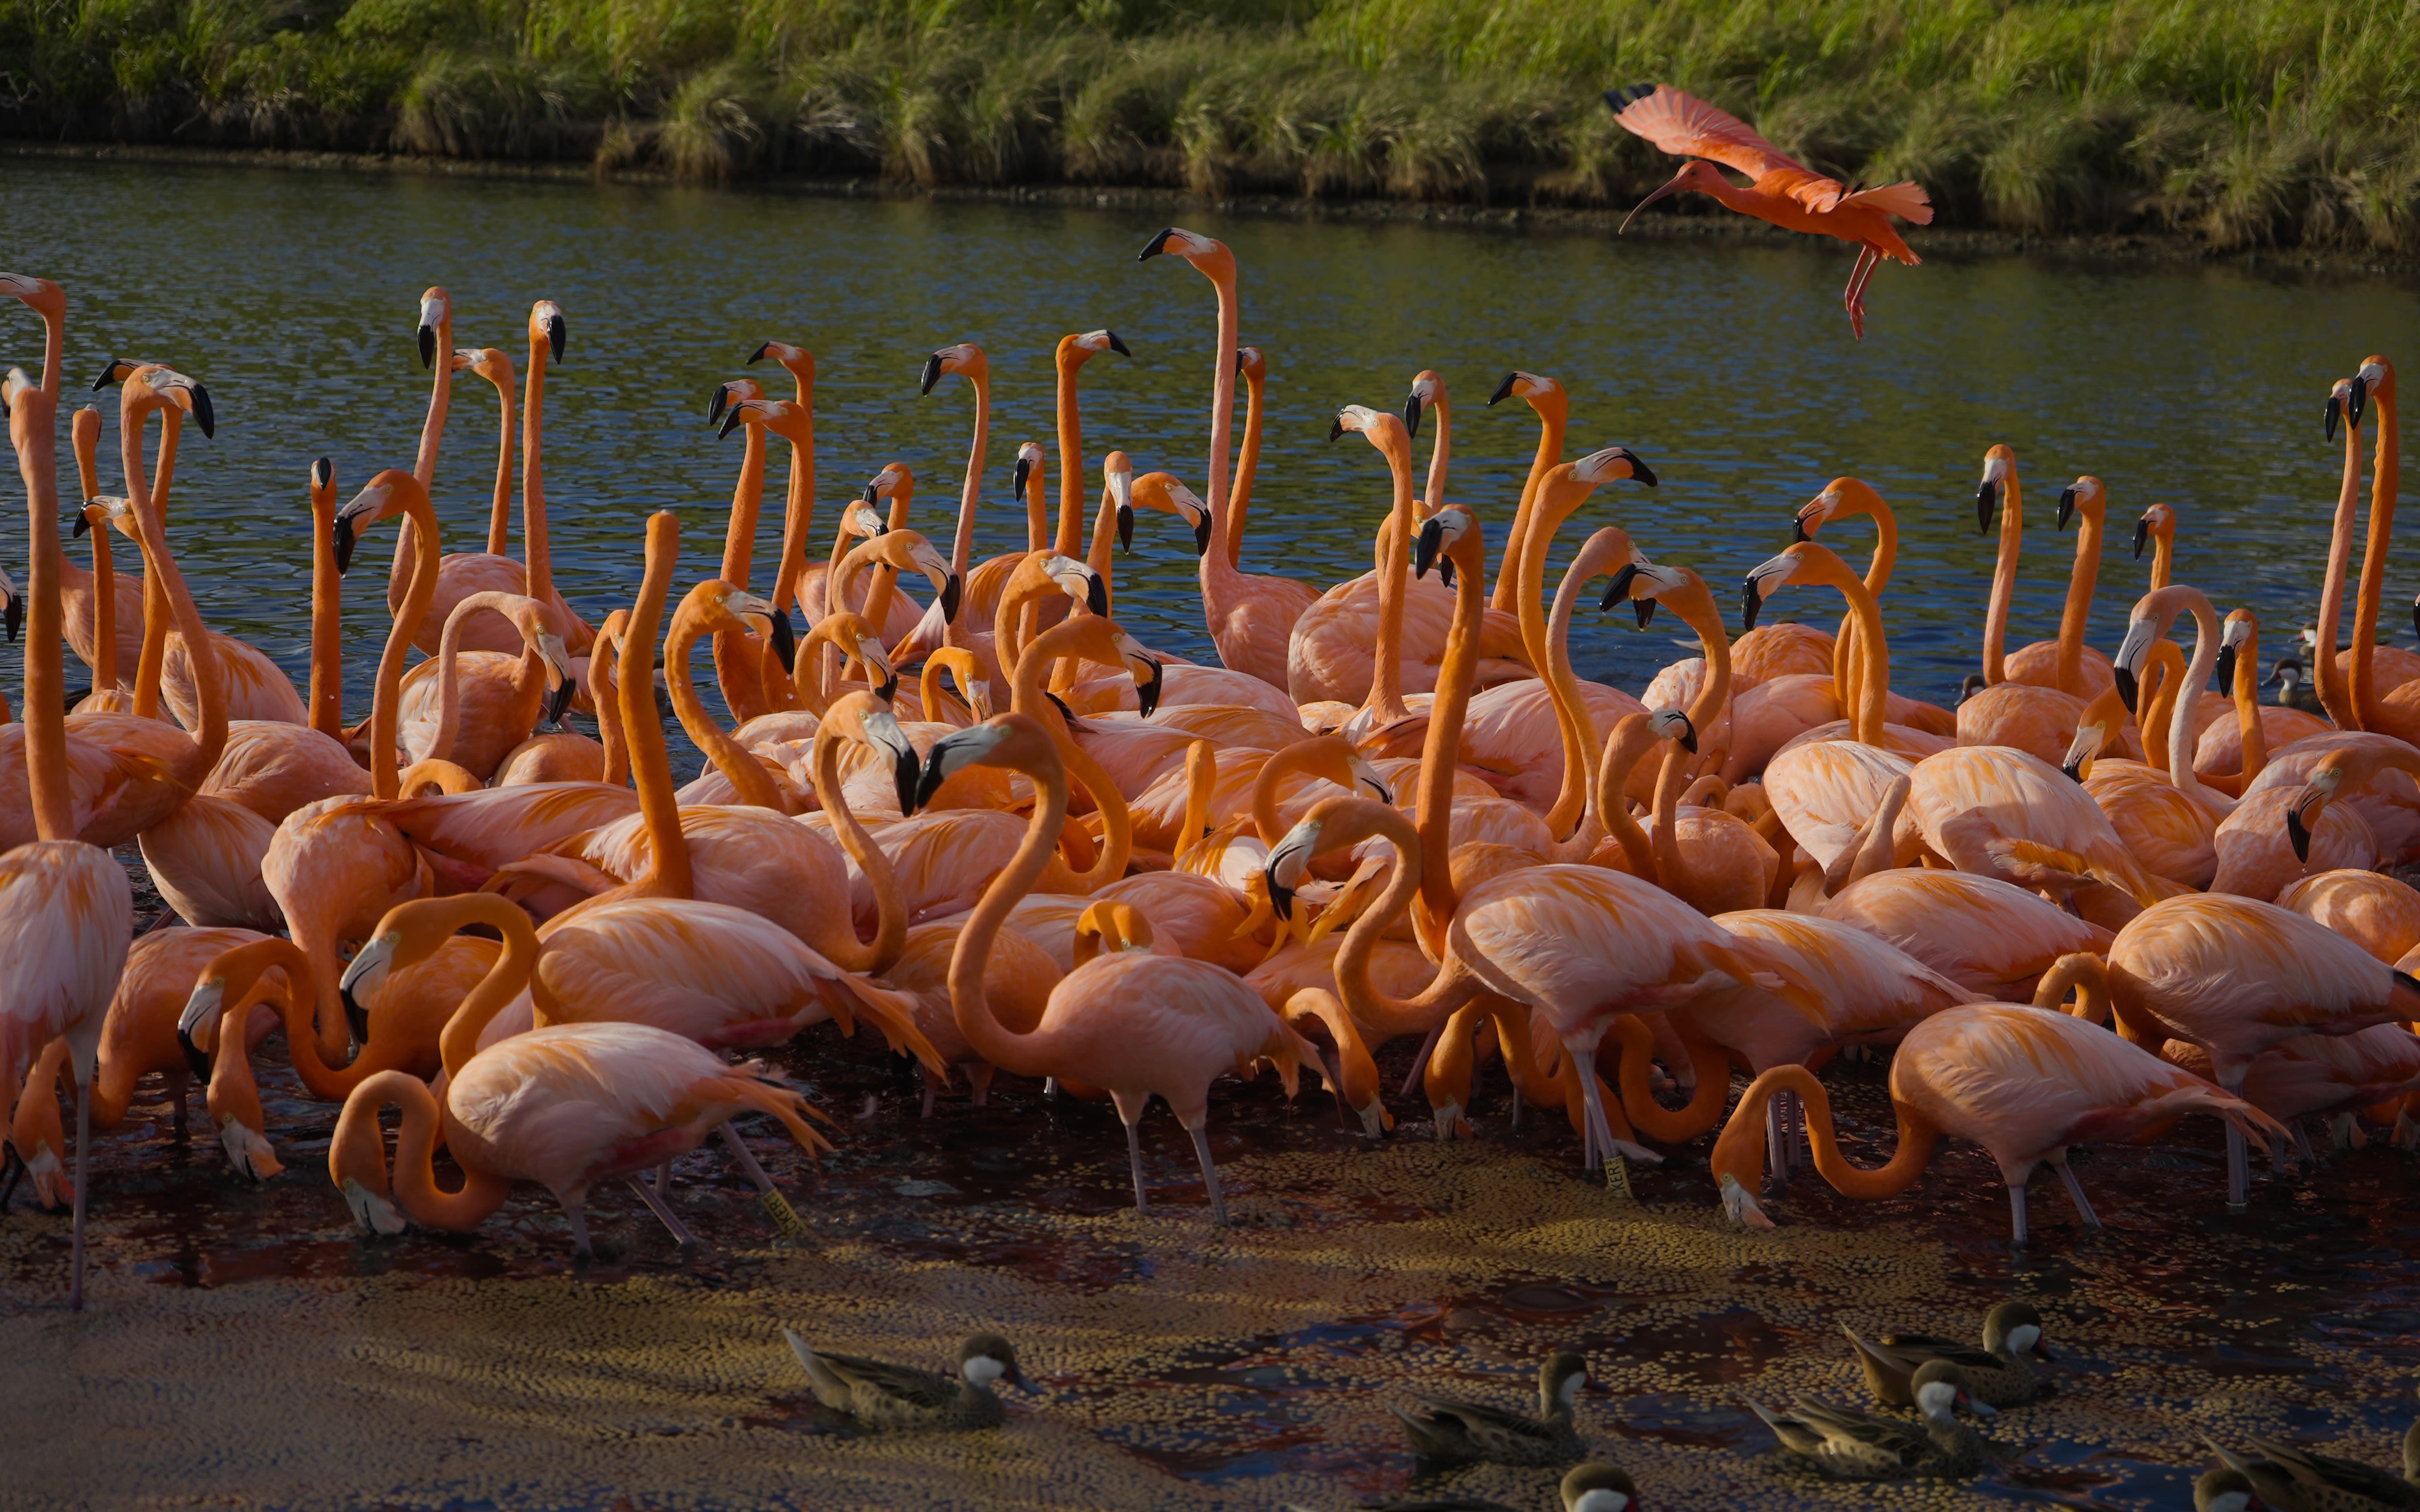 An image of flamingos on Necker Island